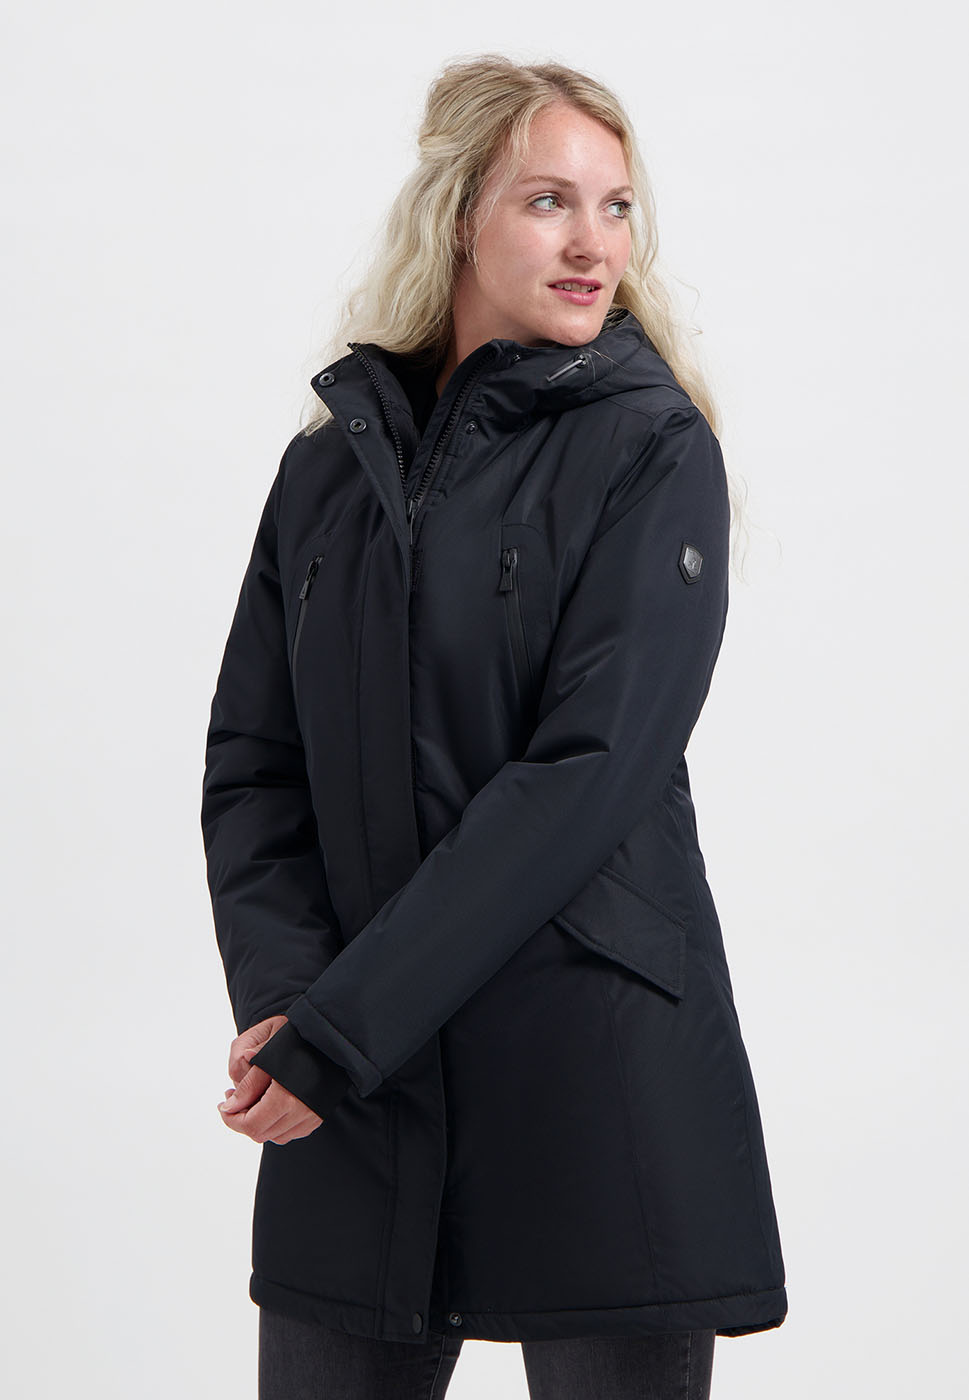 Kjelvik Scandinavian Clothing - Women Jackets Berber Black